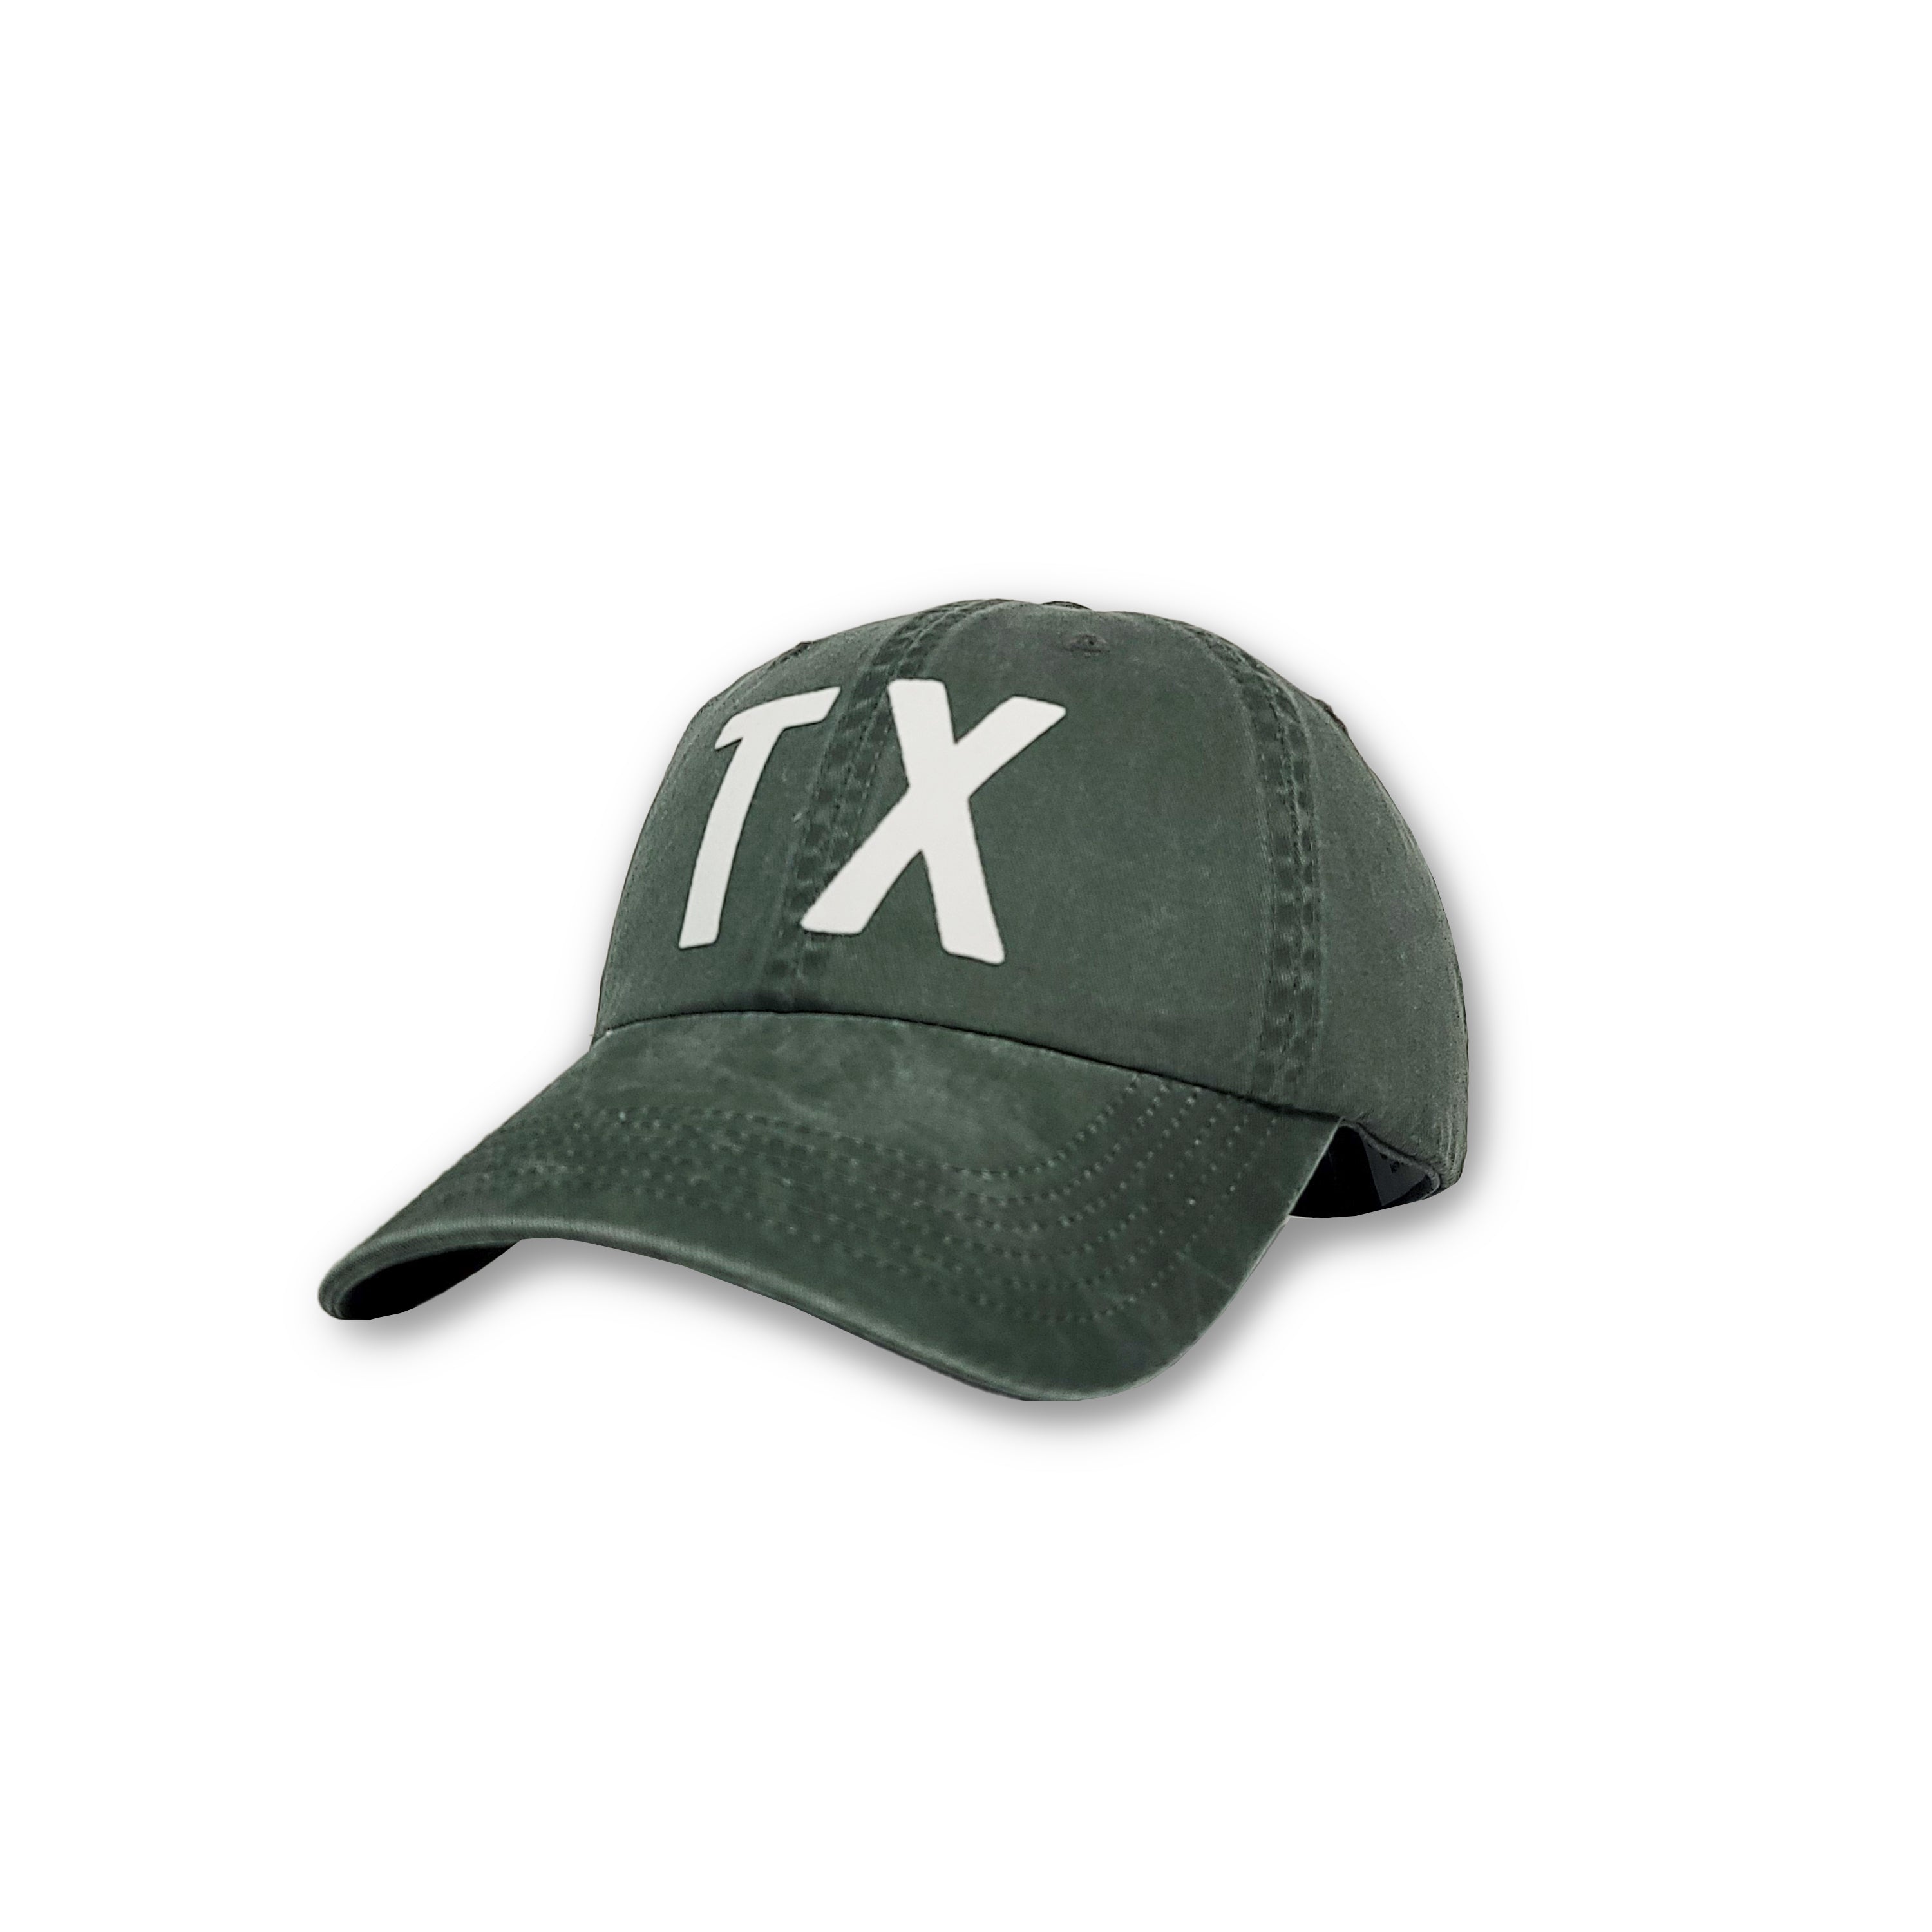 TX block cap by Frankie Jean